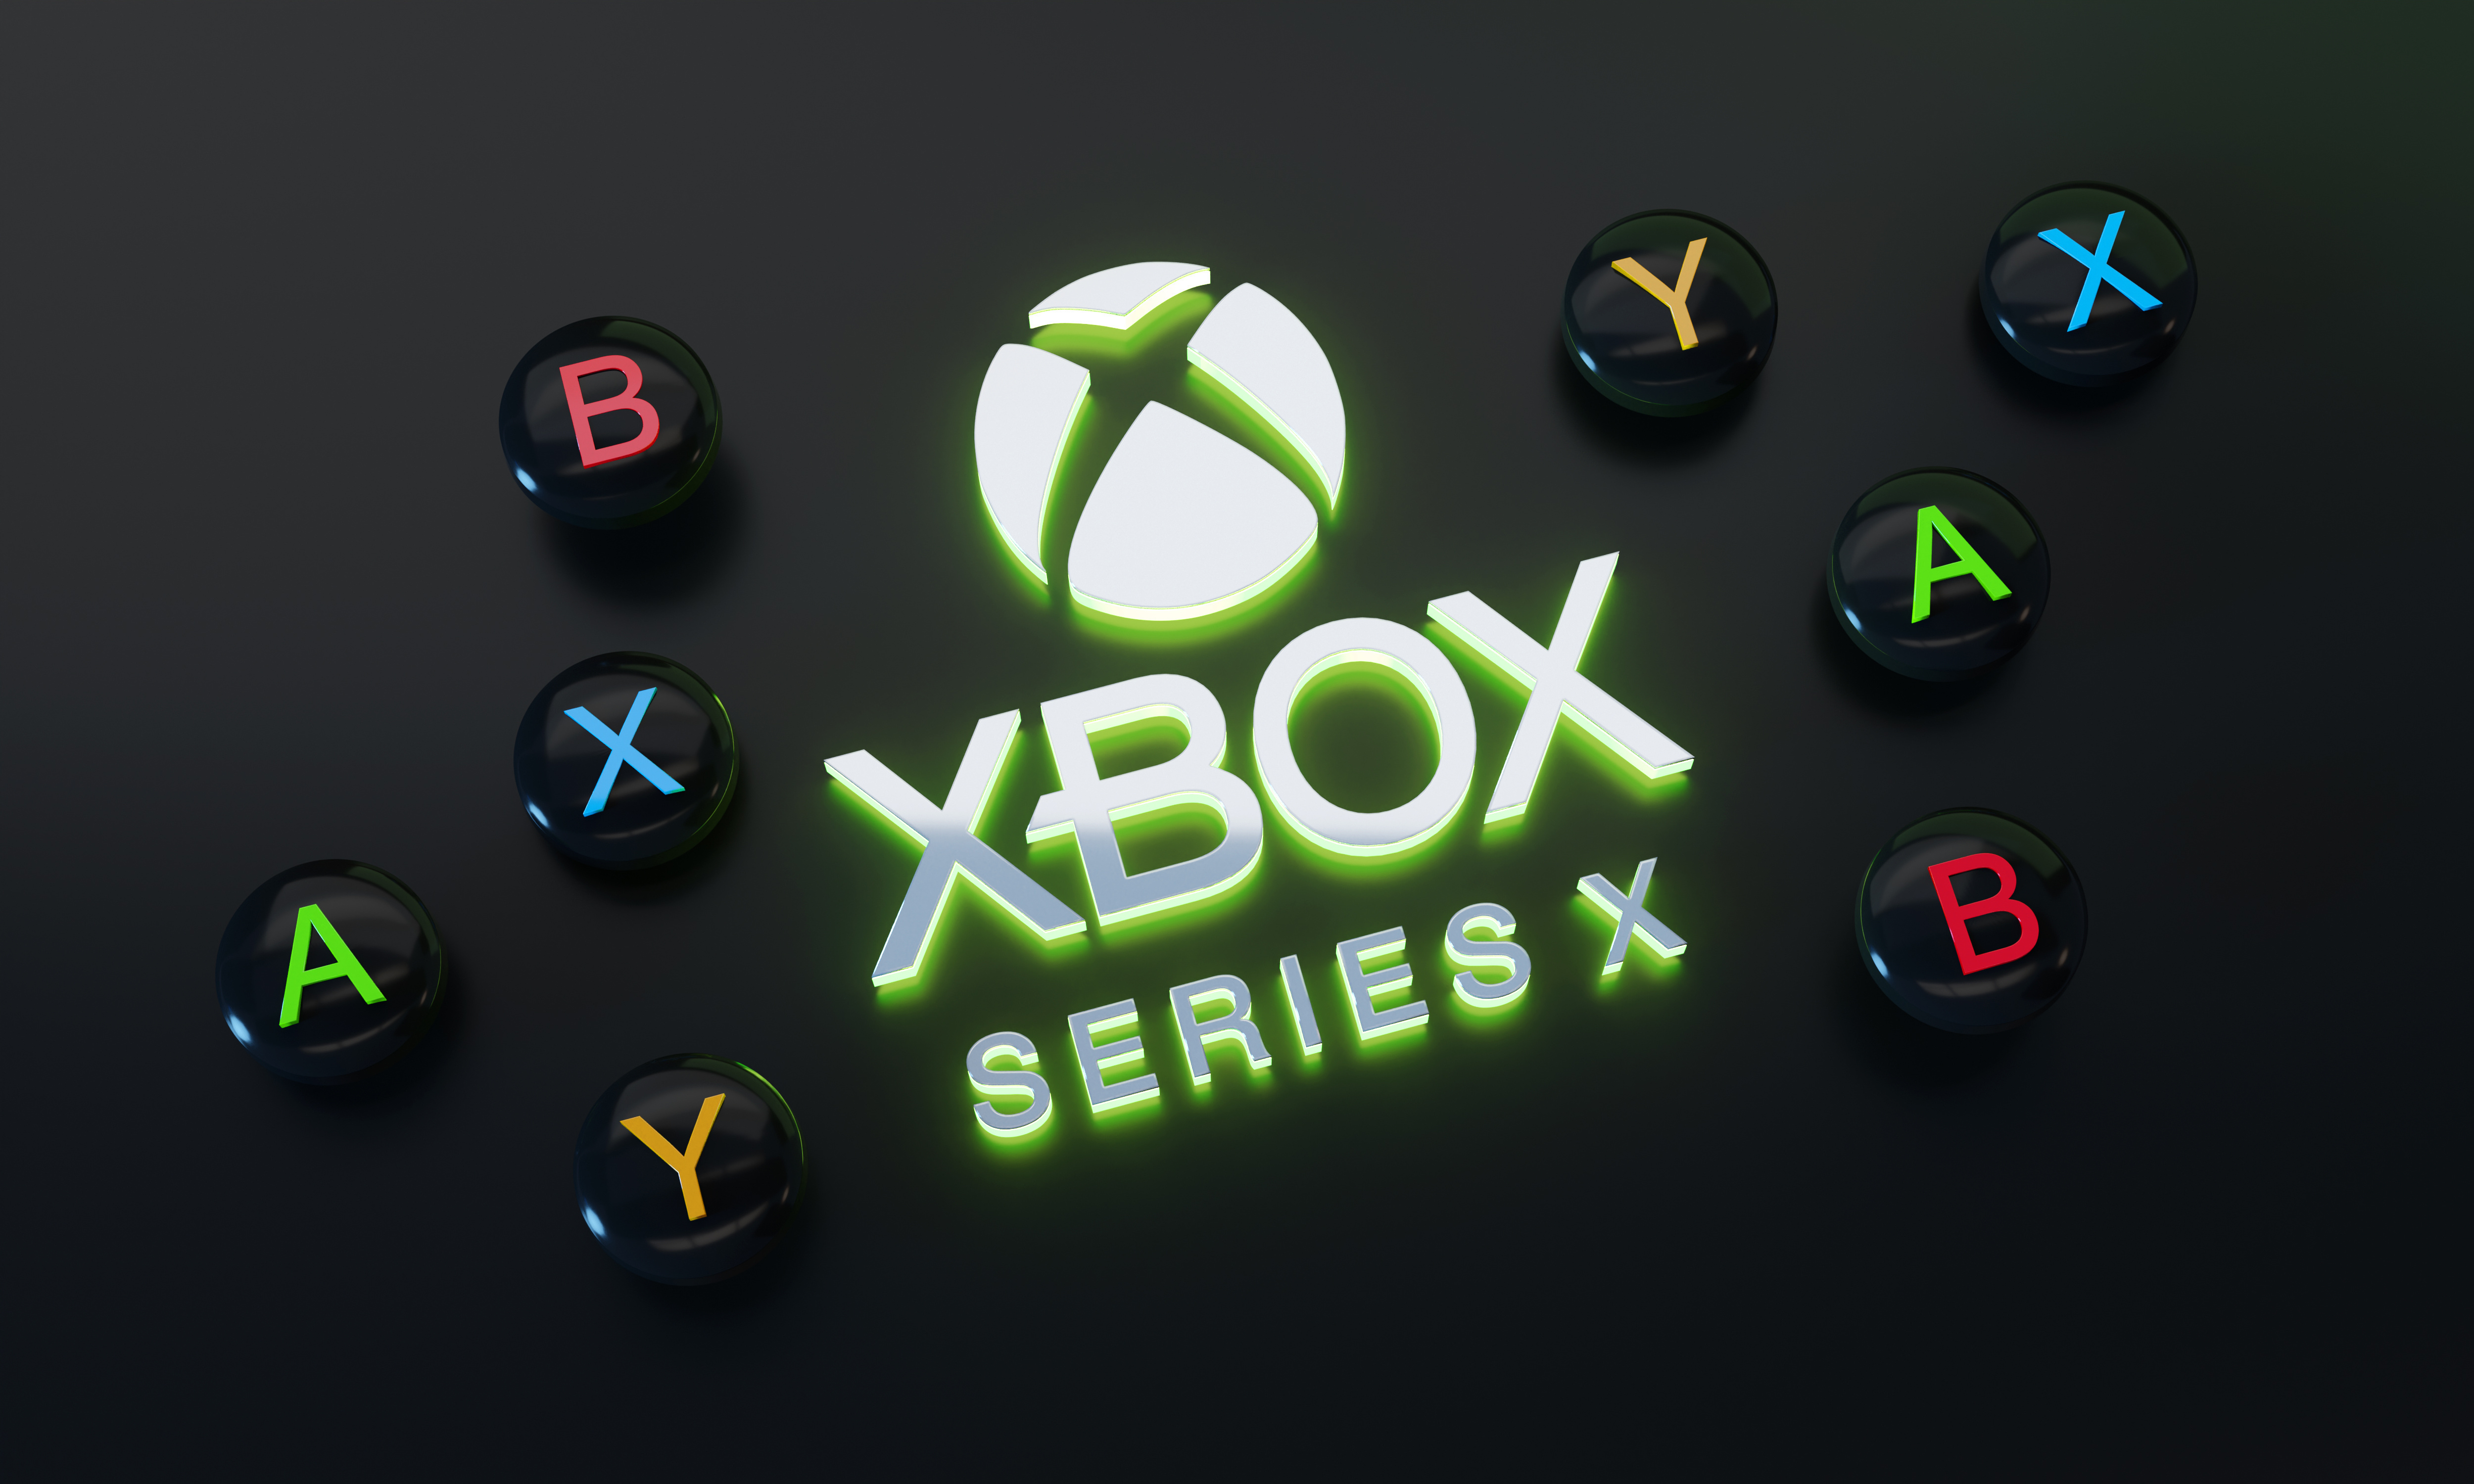 Аватарки xbox. Xbox Series x/s лого.